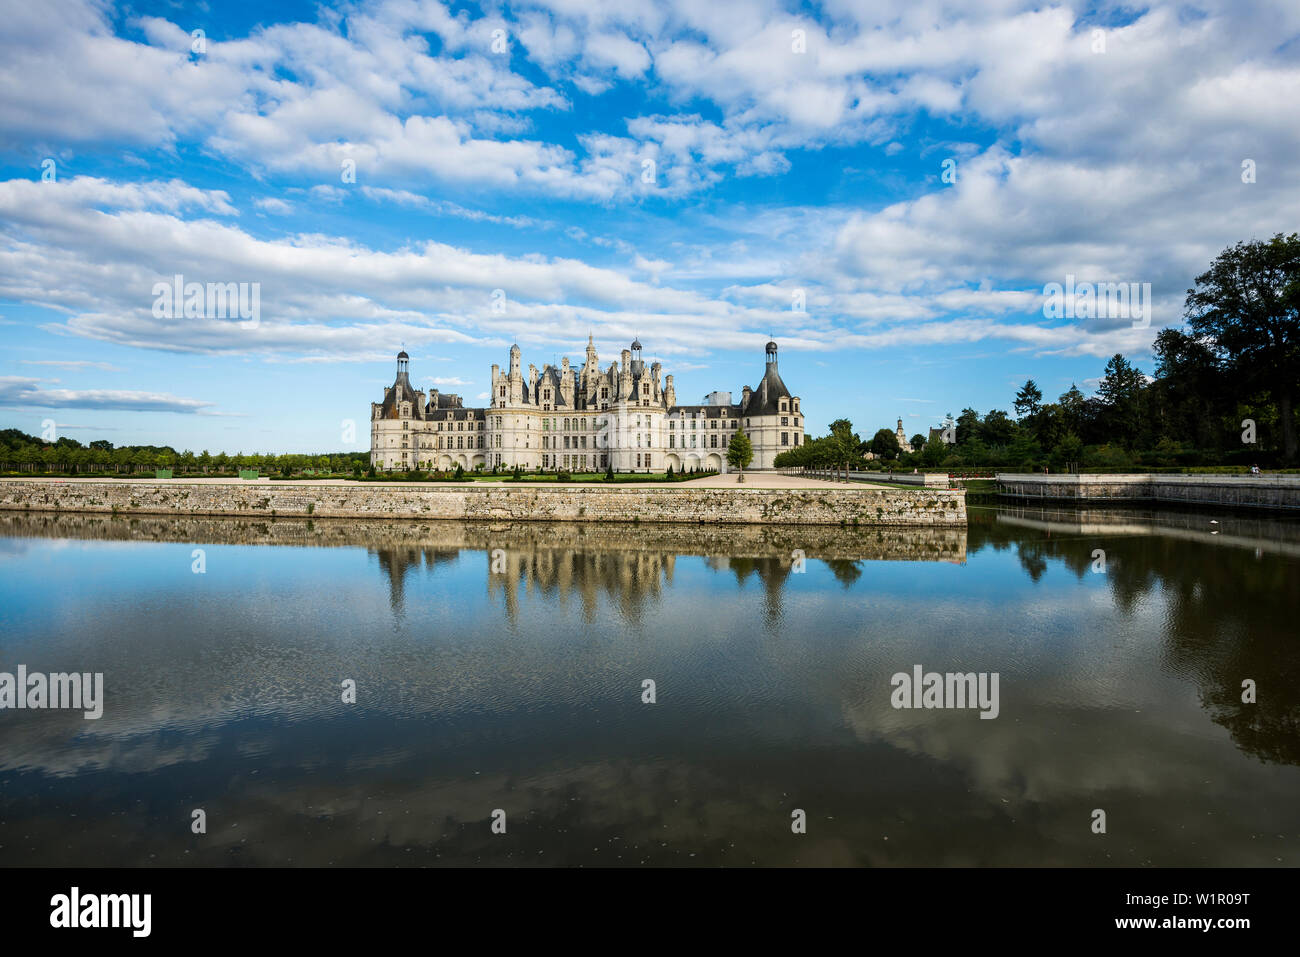 Castillo de Chambord, Fachada norte, Sitio del Patrimonio Mundial de la UNESCO, Chambord, Loire, Departamento Loire et Cher (región Centro), Francia Foto de stock